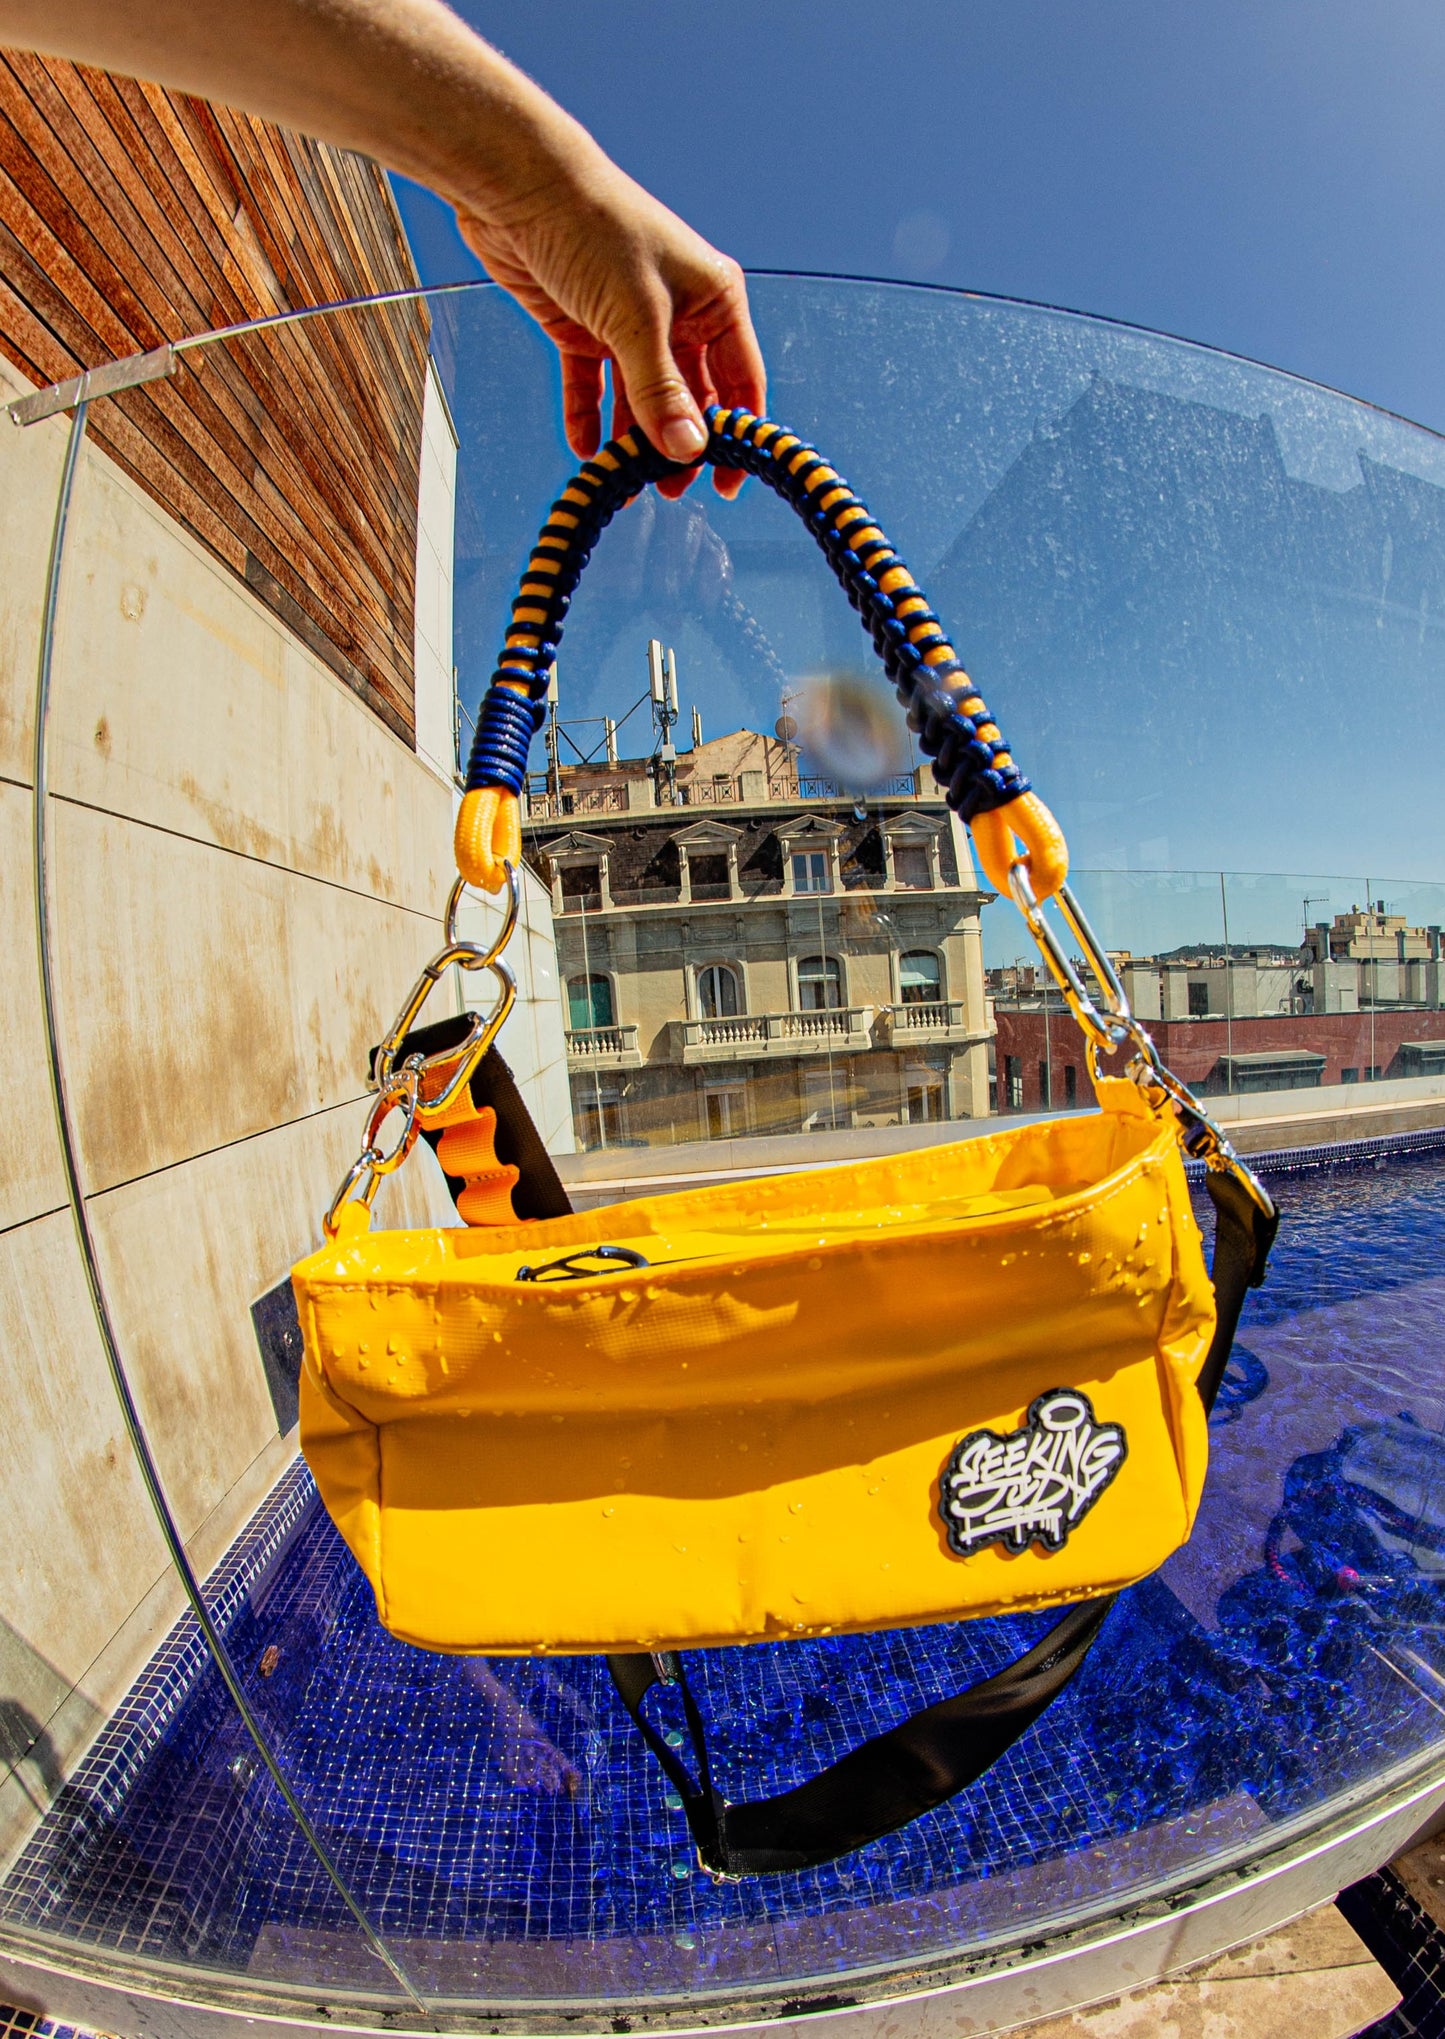 Waterproof Mini Bag Yellow